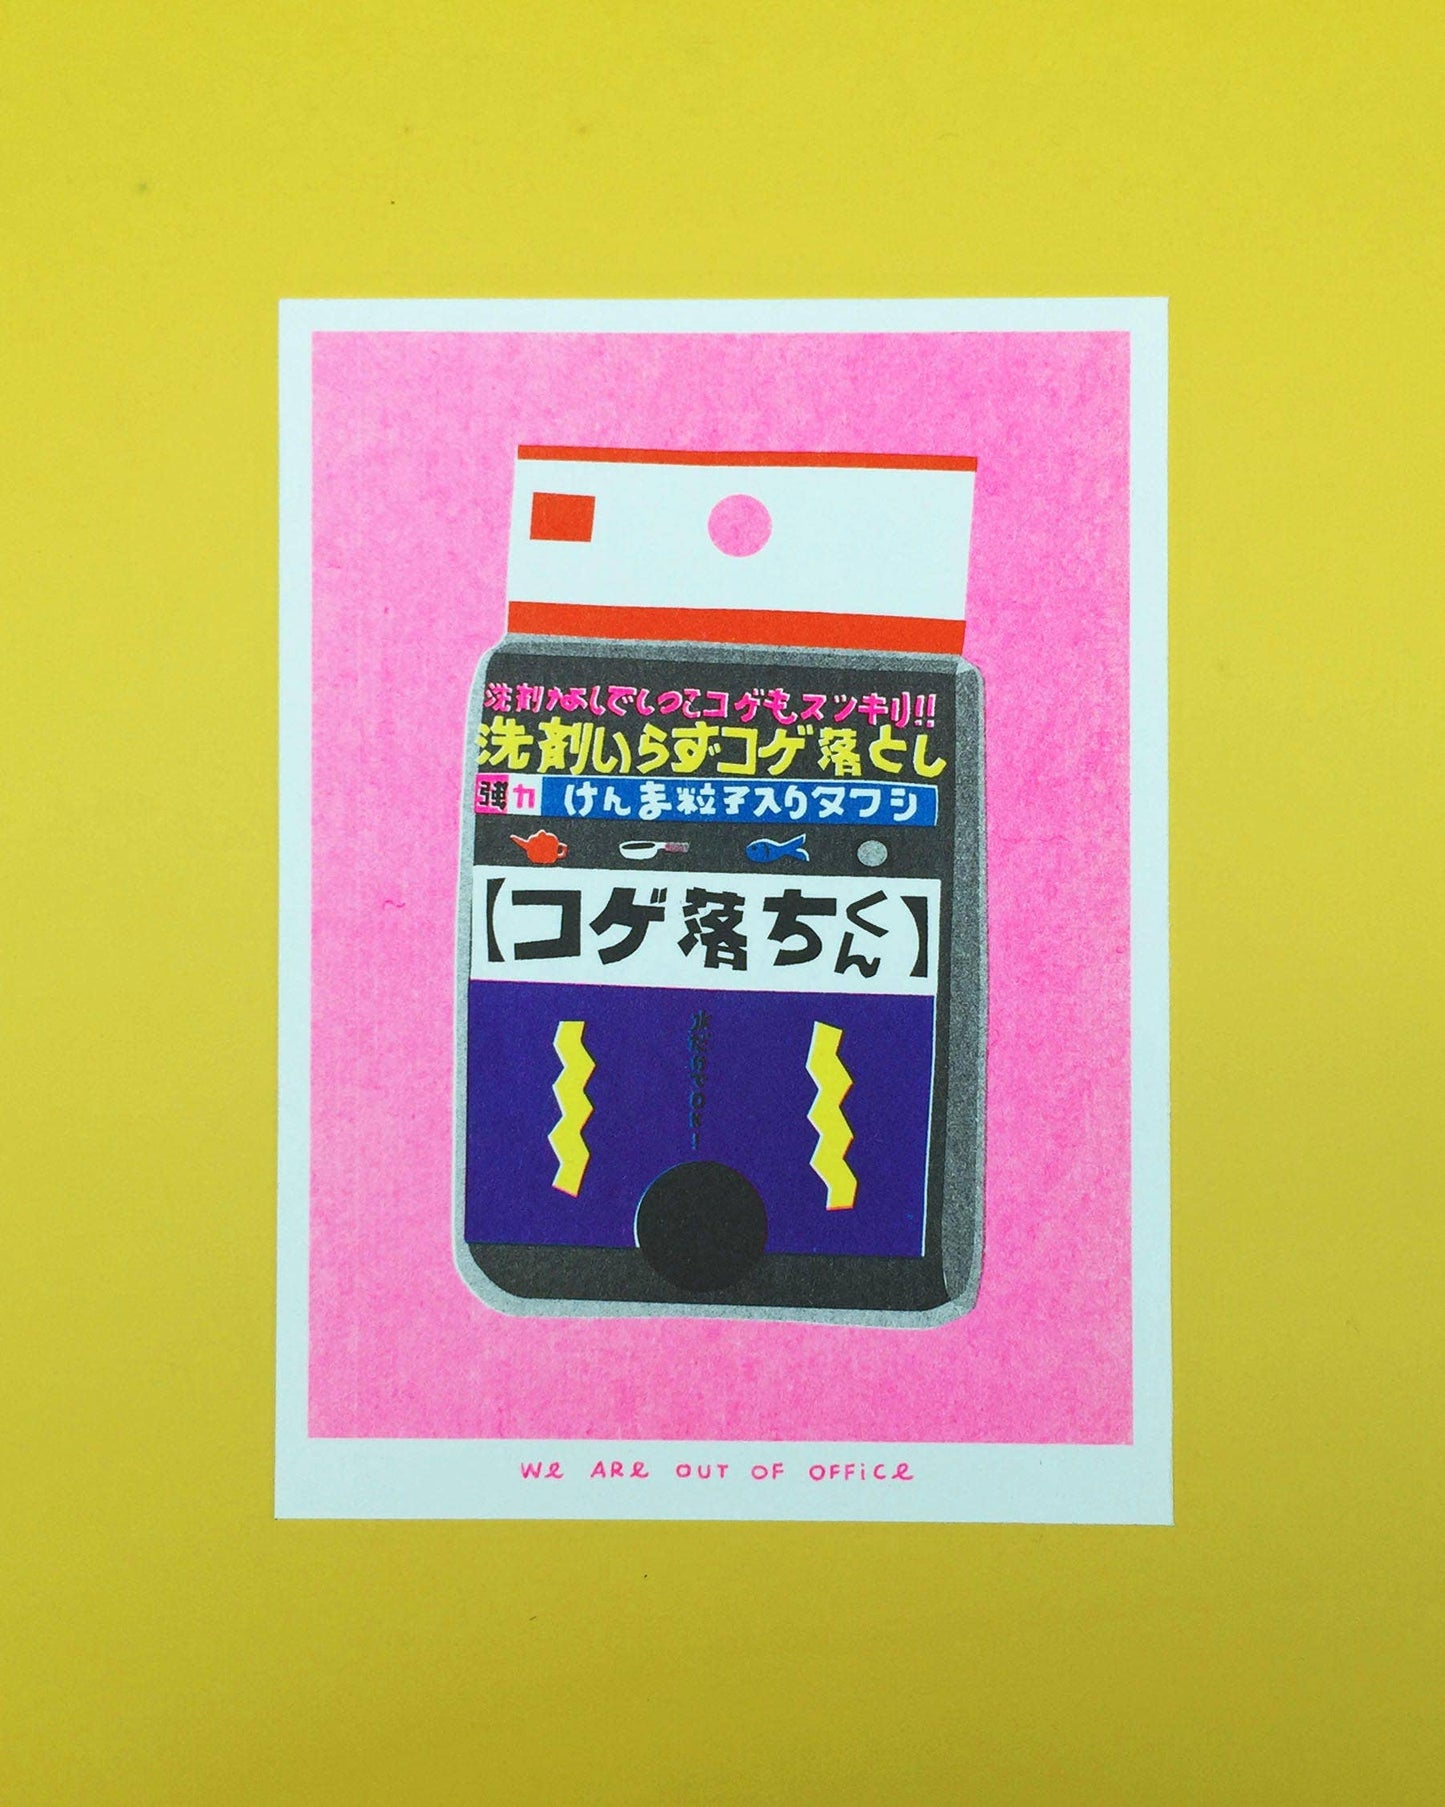 A risograph print of a Japanese sponge